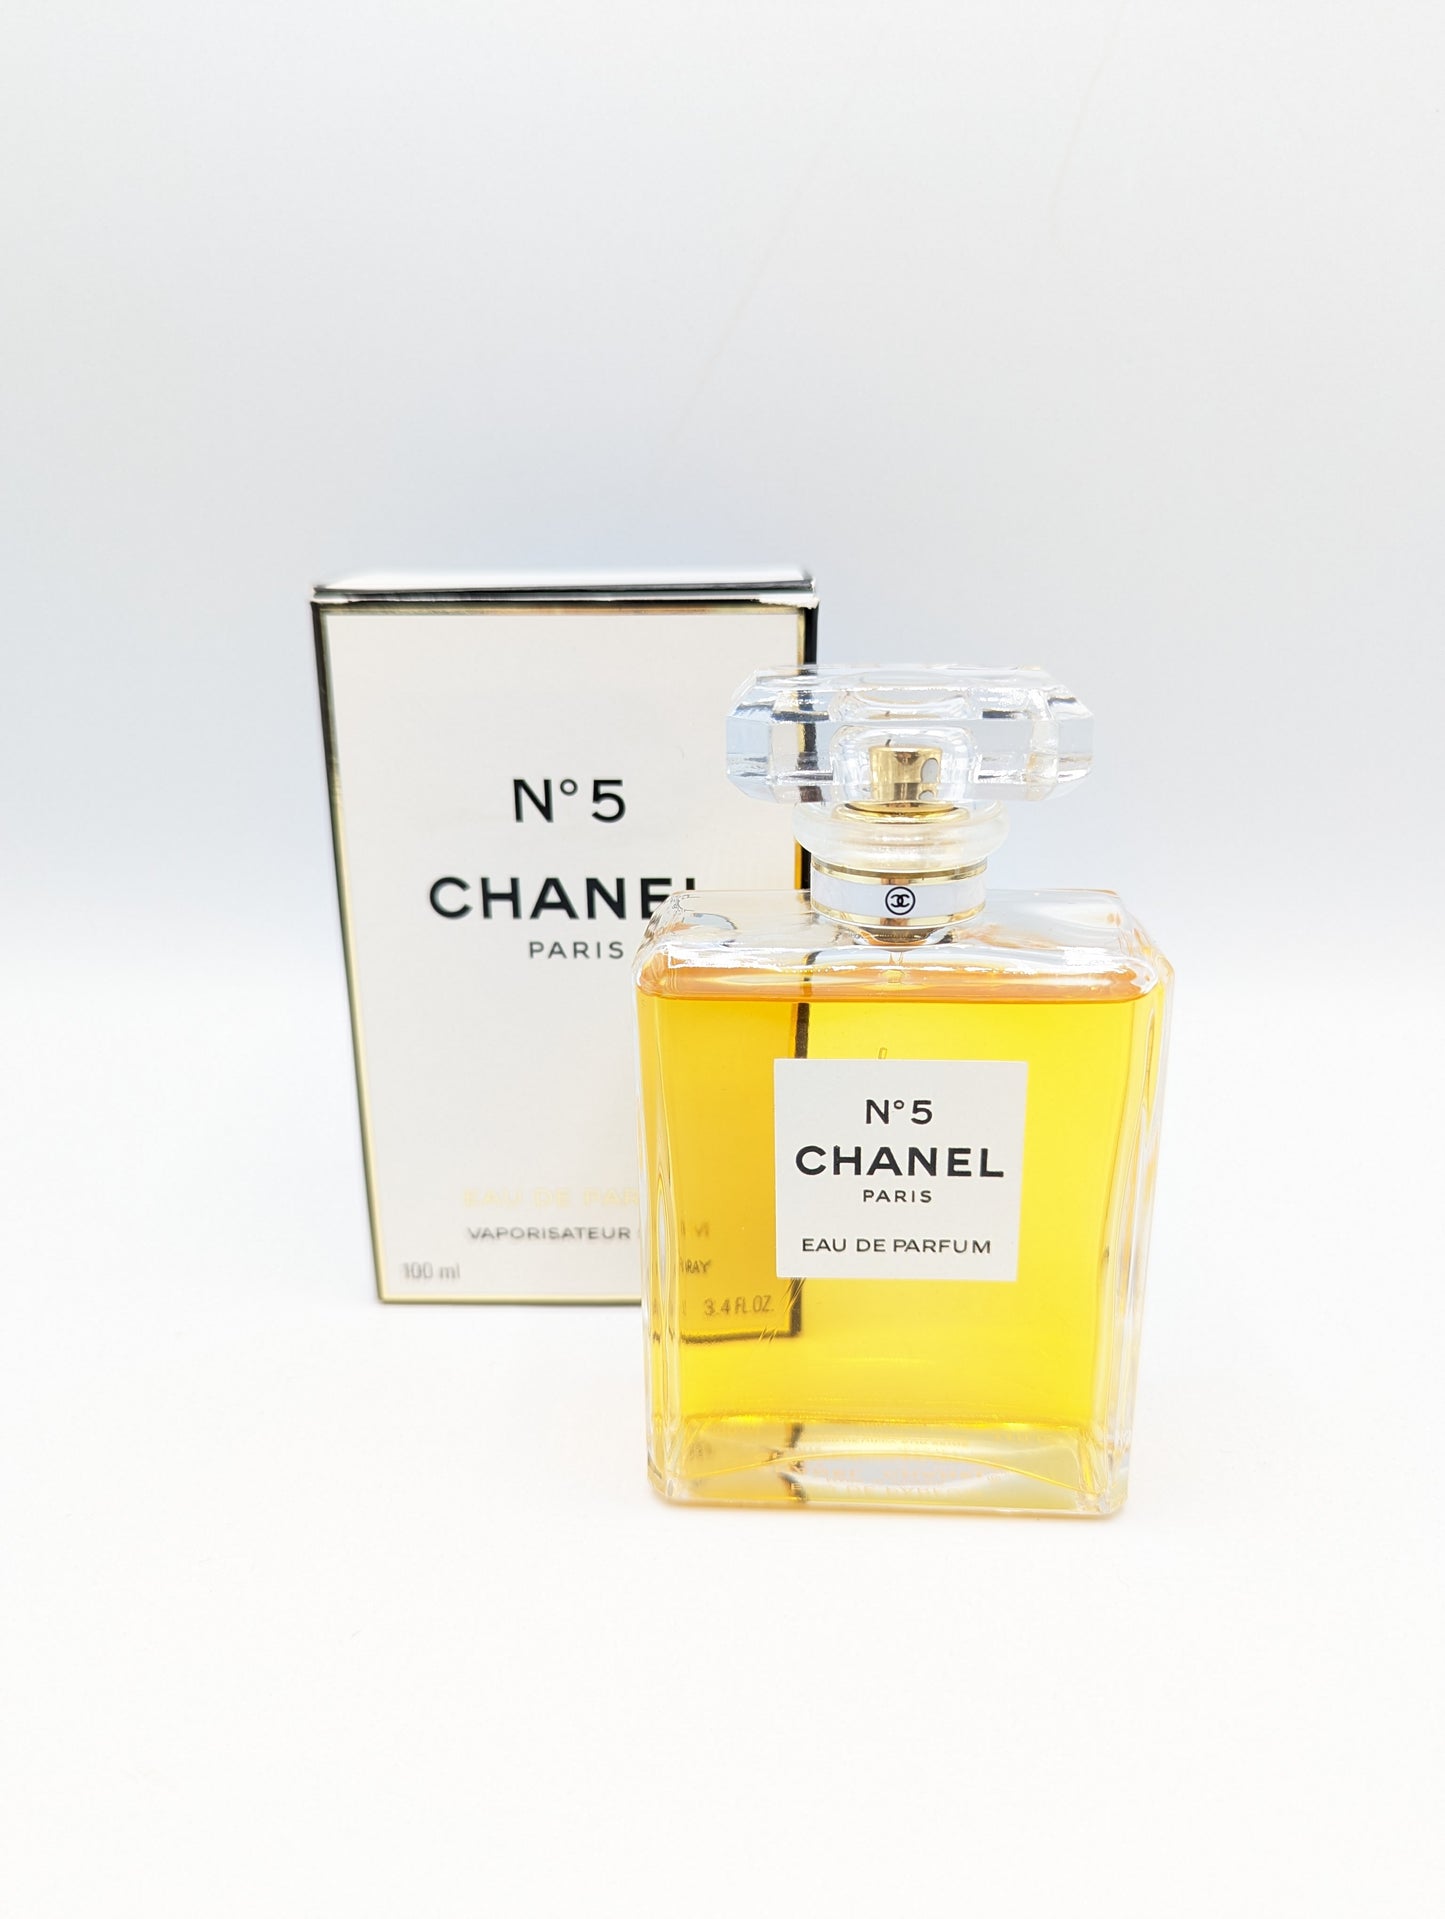 Chanel No 5 Eau de Parfum 3.4 fl oz